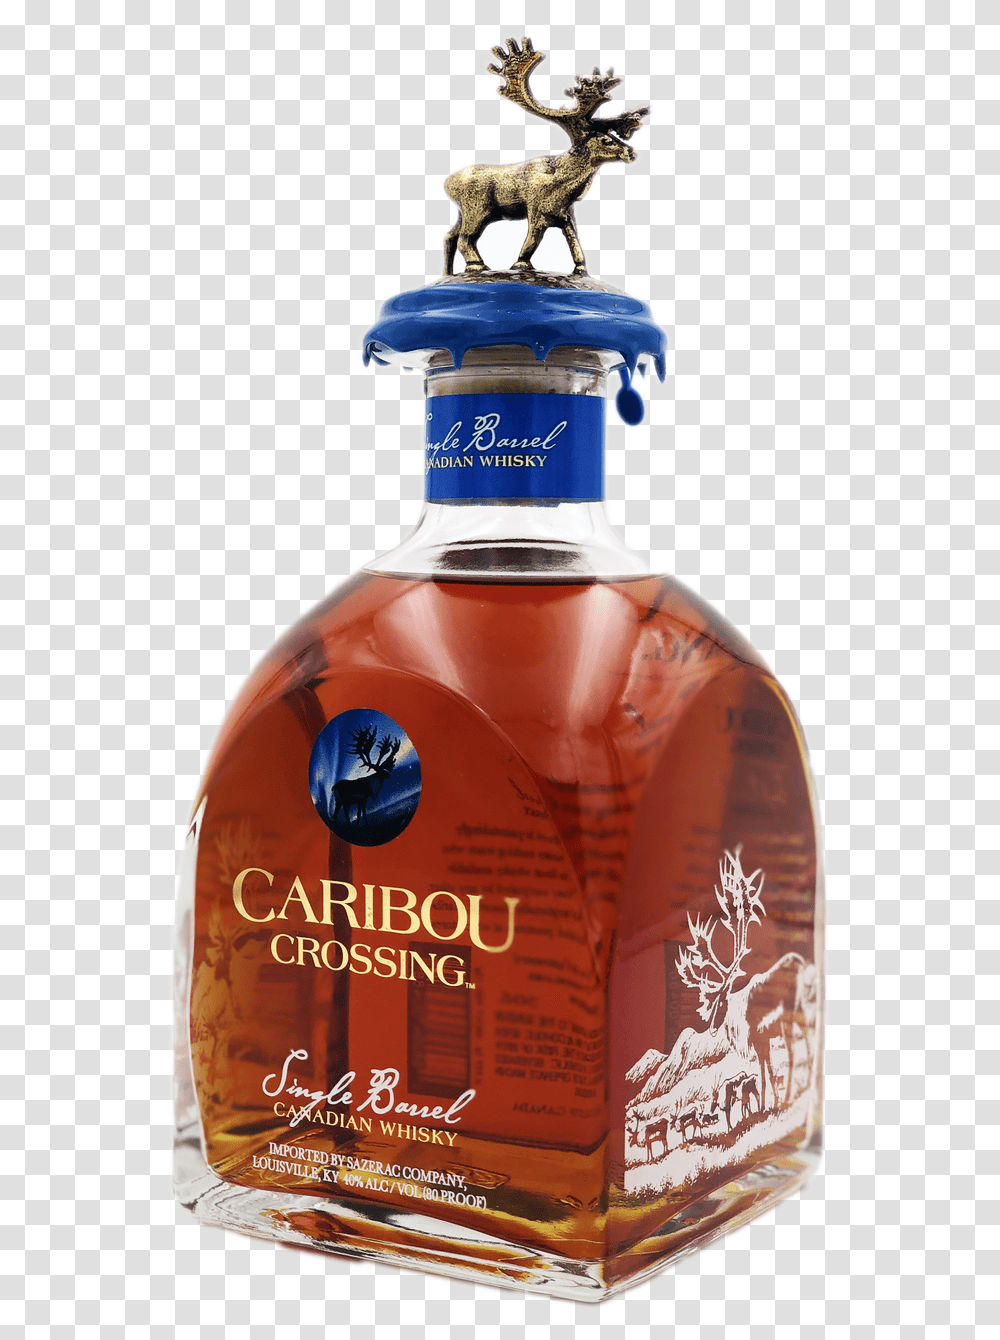 Caribou Crossing Single Barrel Whisky Domaine De Canton, Liquor, Alcohol, Beverage, Drink Transparent Png